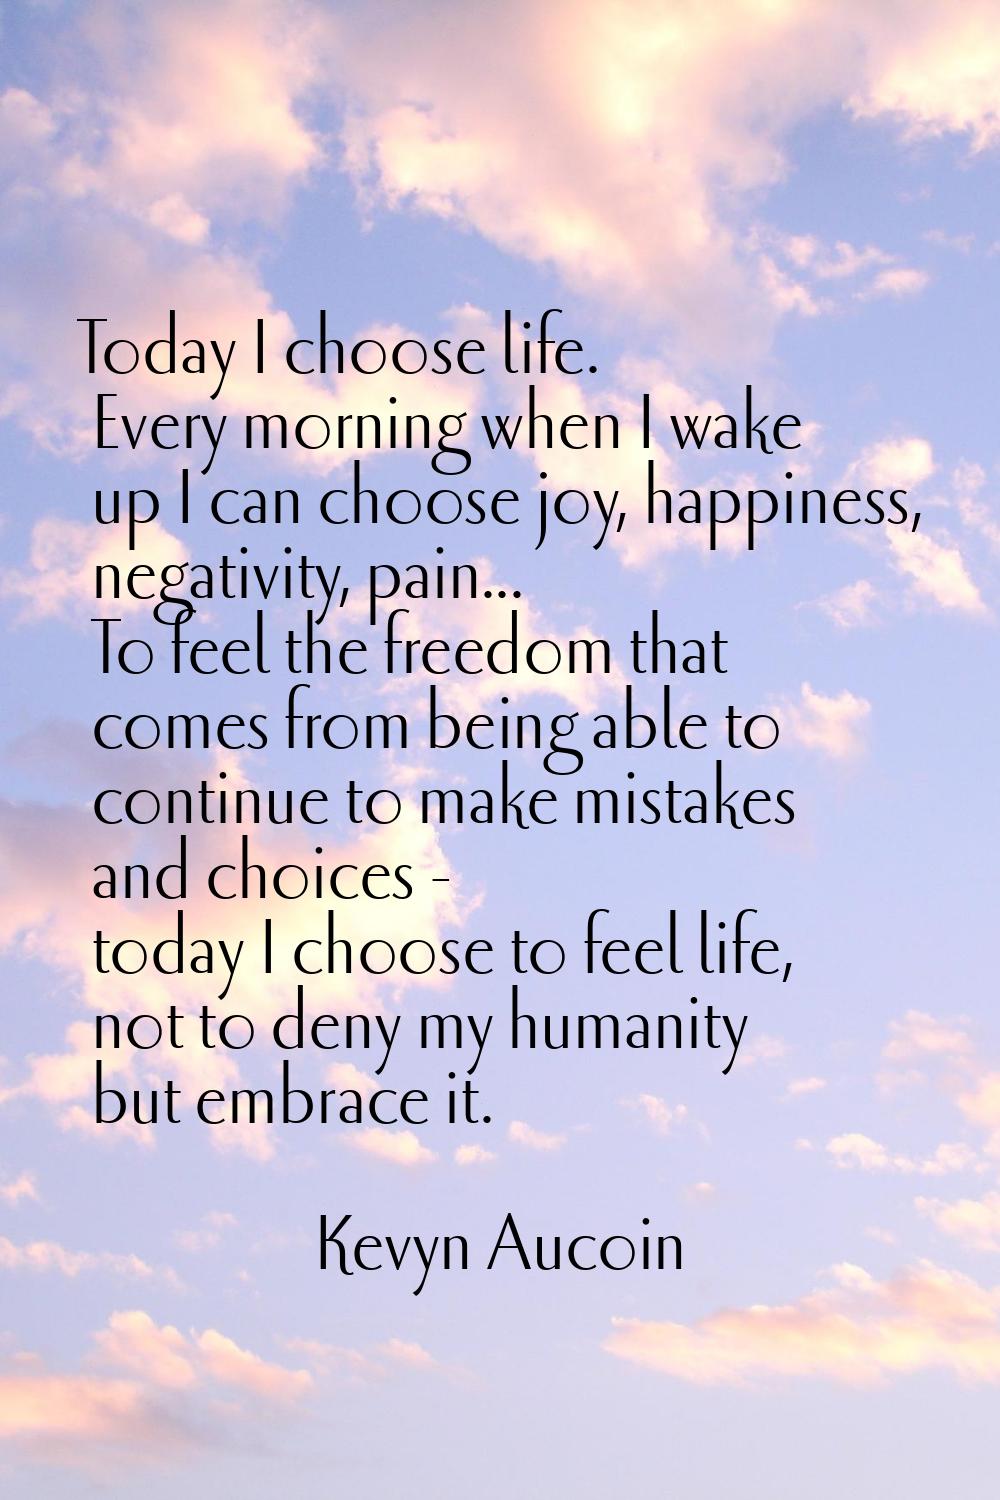 Today I choose life. Every morning when I wake up I can choose joy, happiness, negativity, pain... 